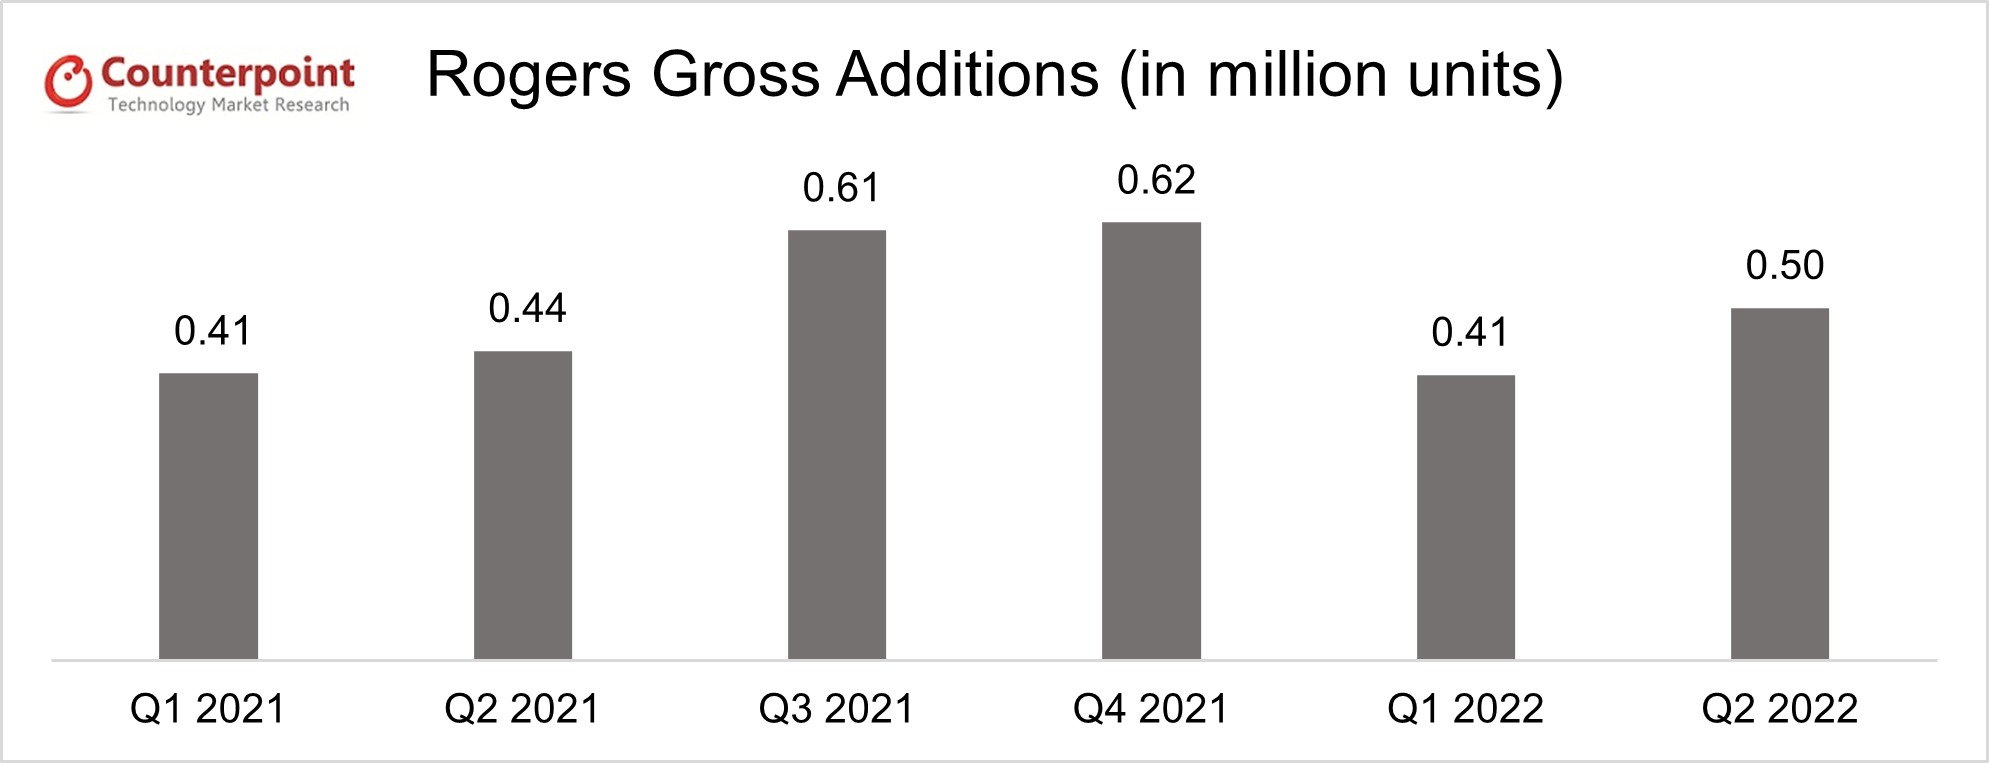 Rogers Gross additions_Q2 2022